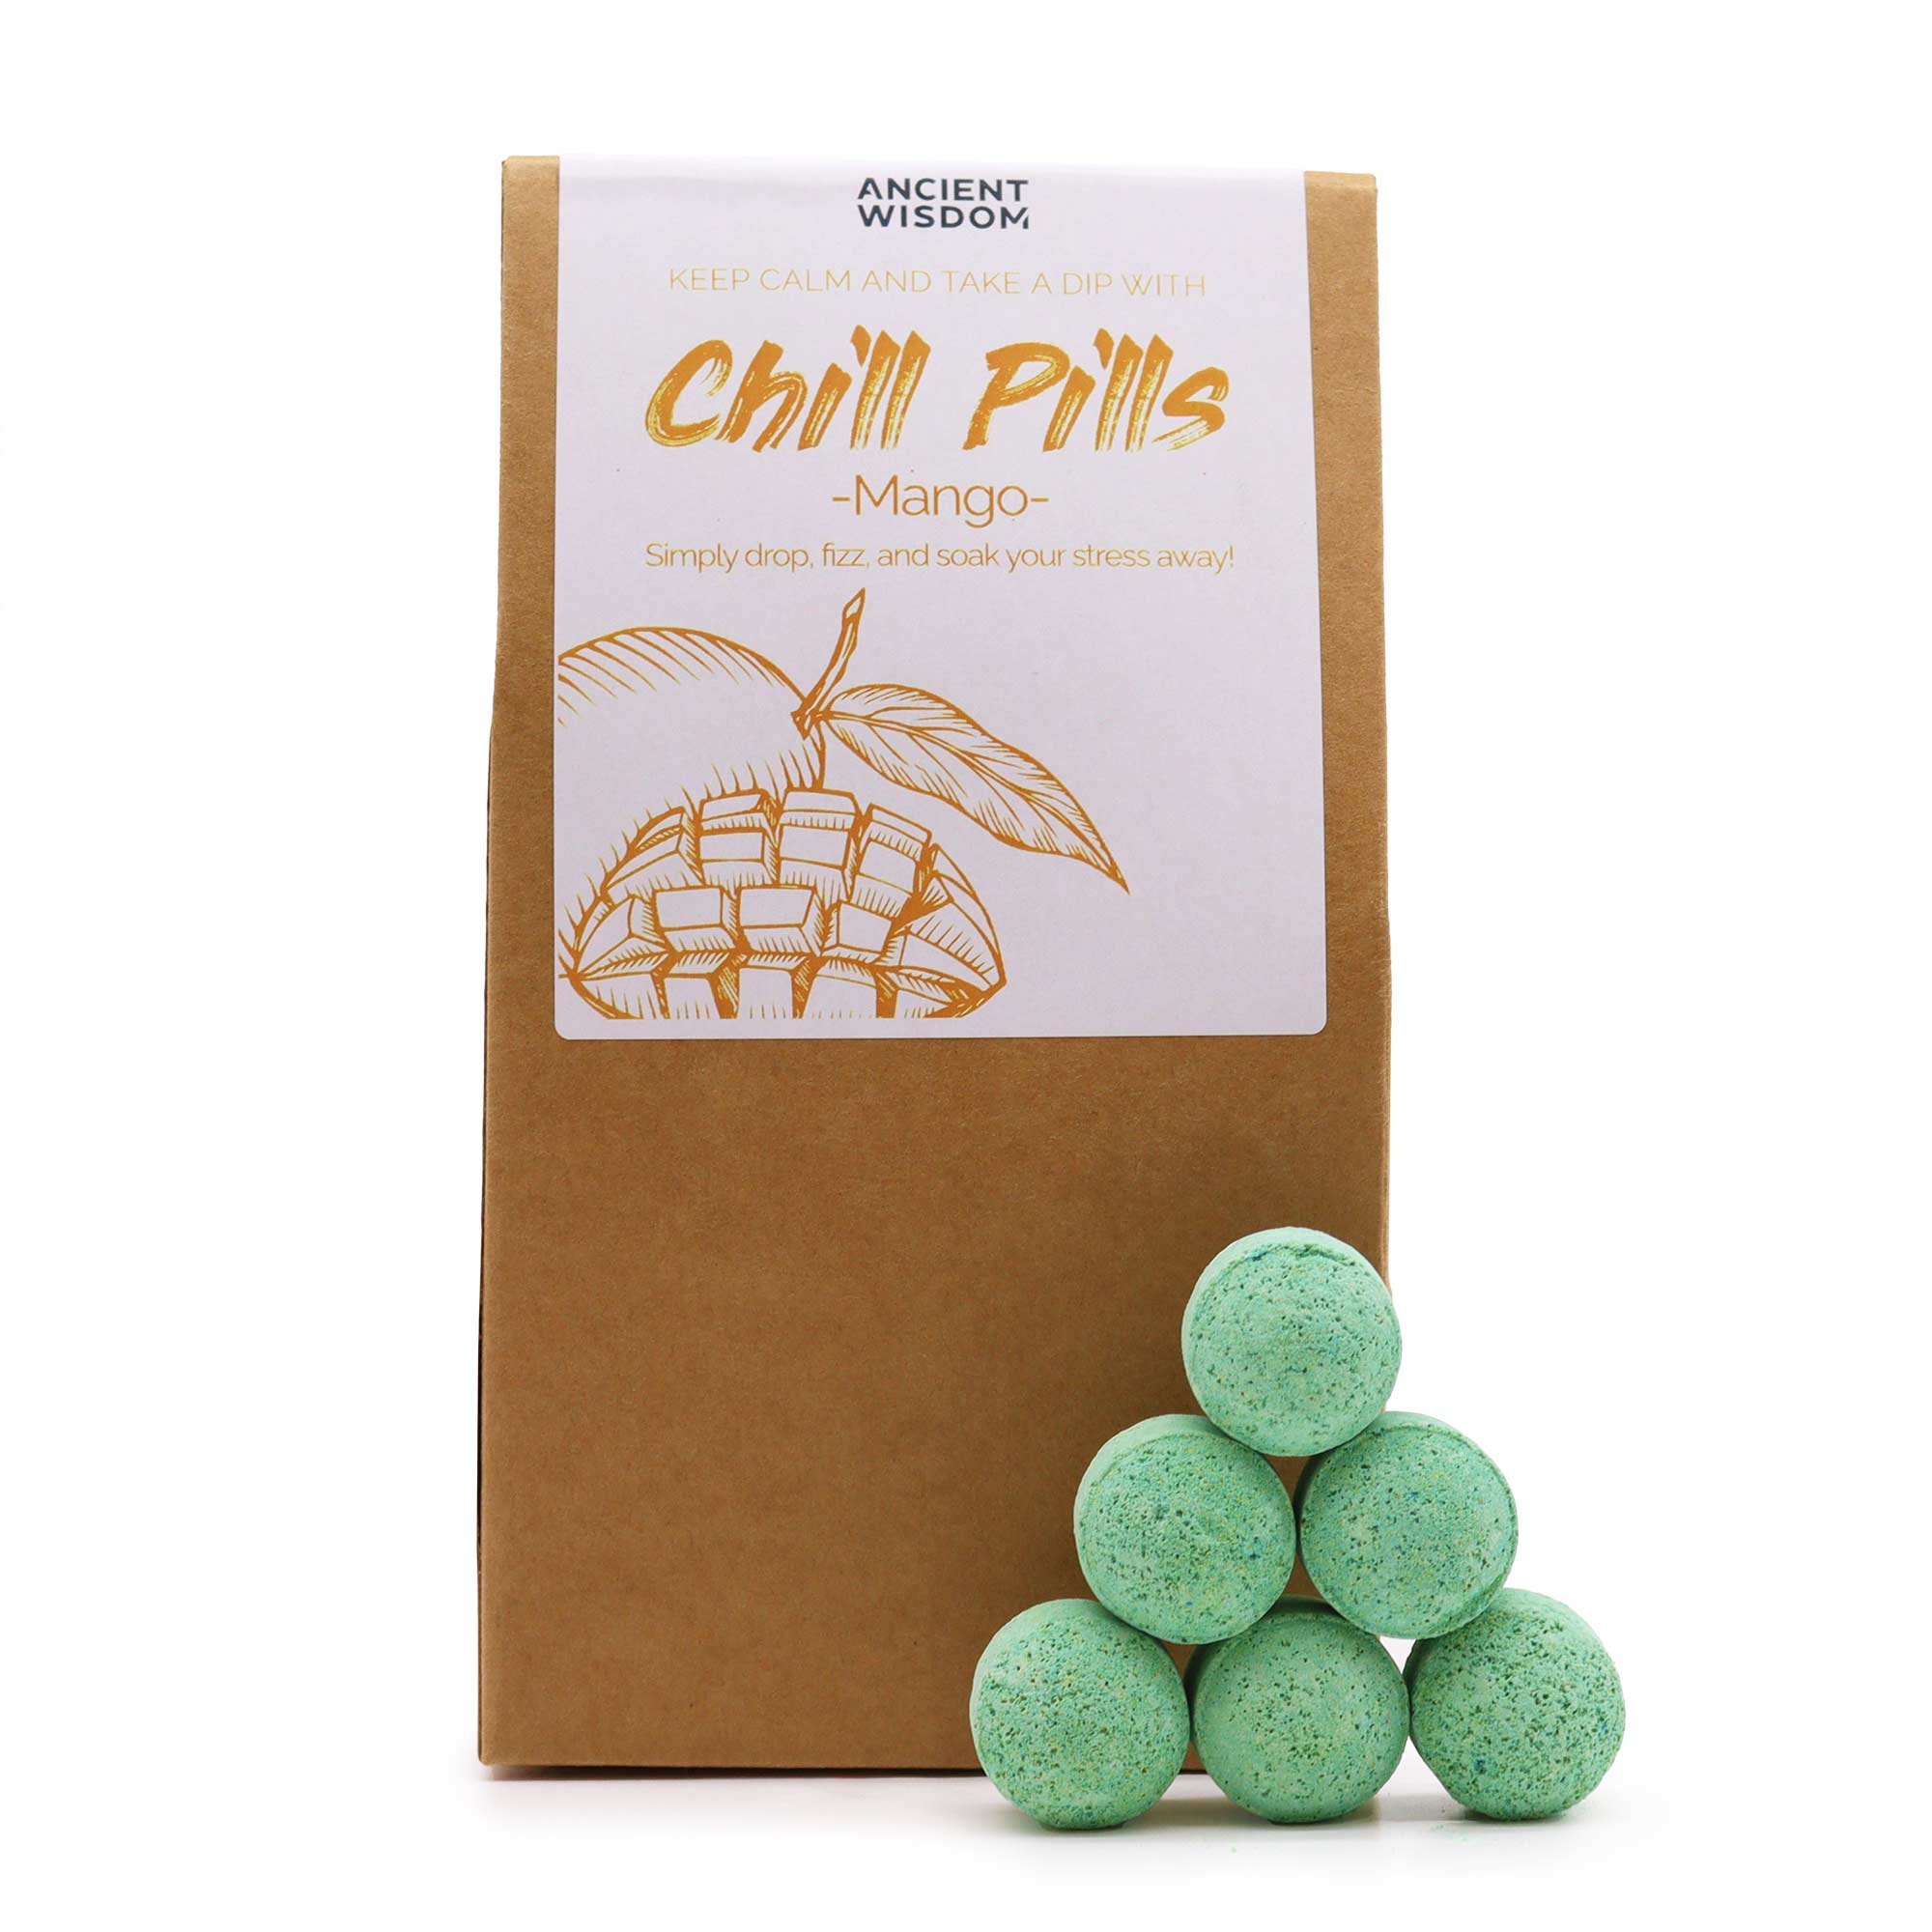 View Chill Pills Gift Pack 350g Mango information